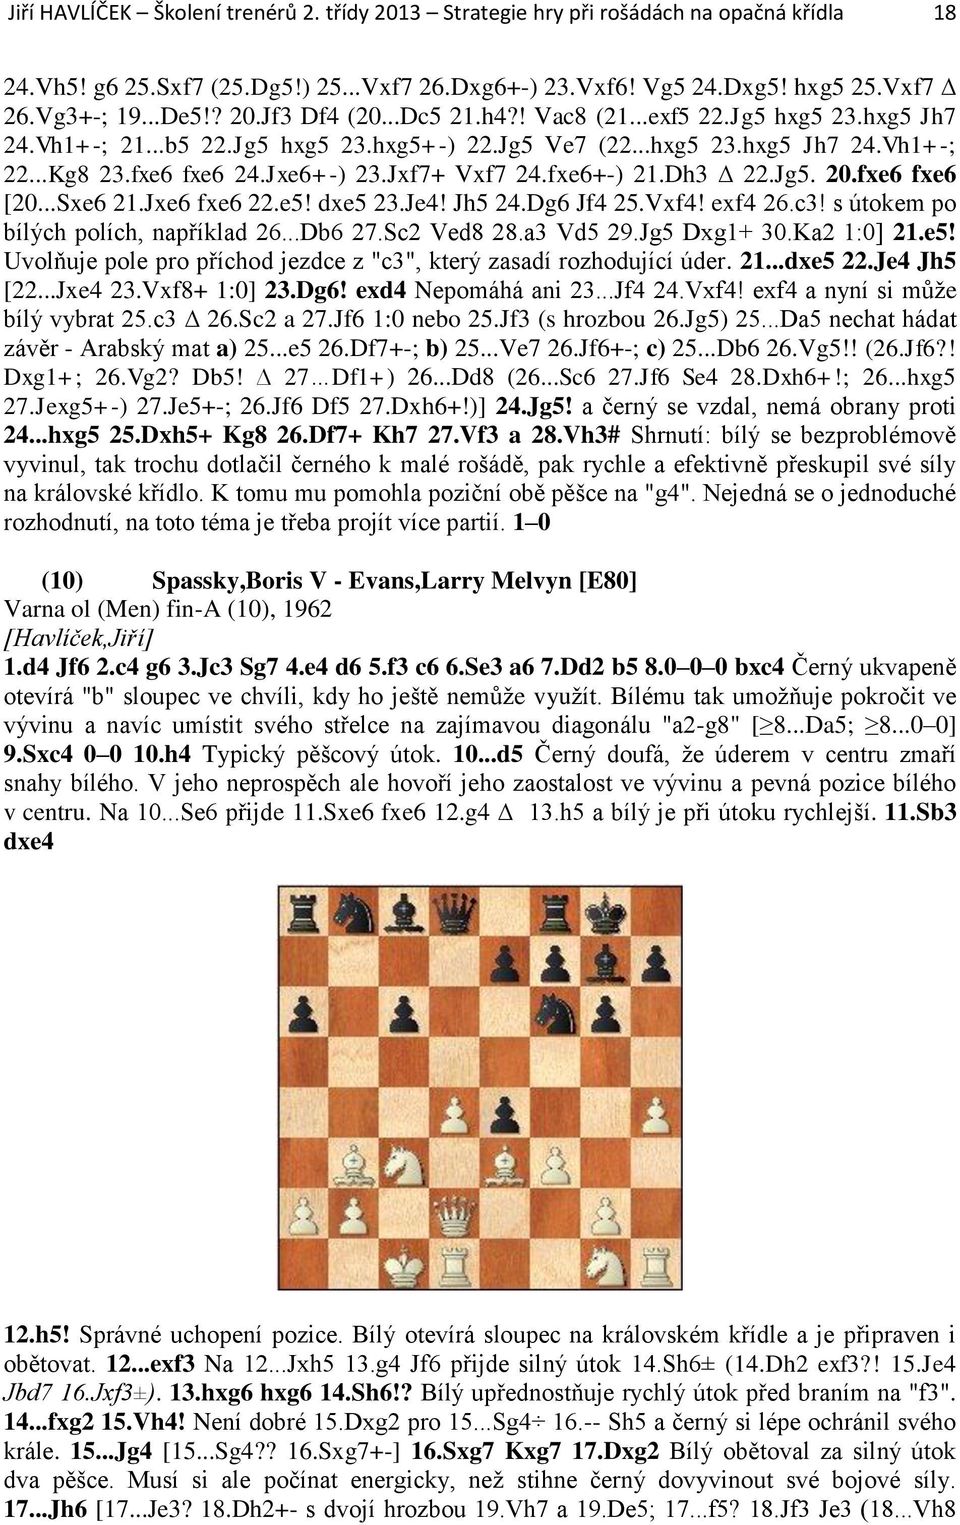 Dh3 22.Jg5. 20.fxe6 fxe6 [20...Sxe6 21.Jxe6 fxe6 22.e5! dxe5 23.Je4! Jh5 24.Dg6 Jf4 25.Vxf4! exf4 26.c3! s útokem po bílých polích, například 26...Db6 27.Sc2 Ved8 28.a3 Vd5 29.Jg5 Dxg1+ 30.